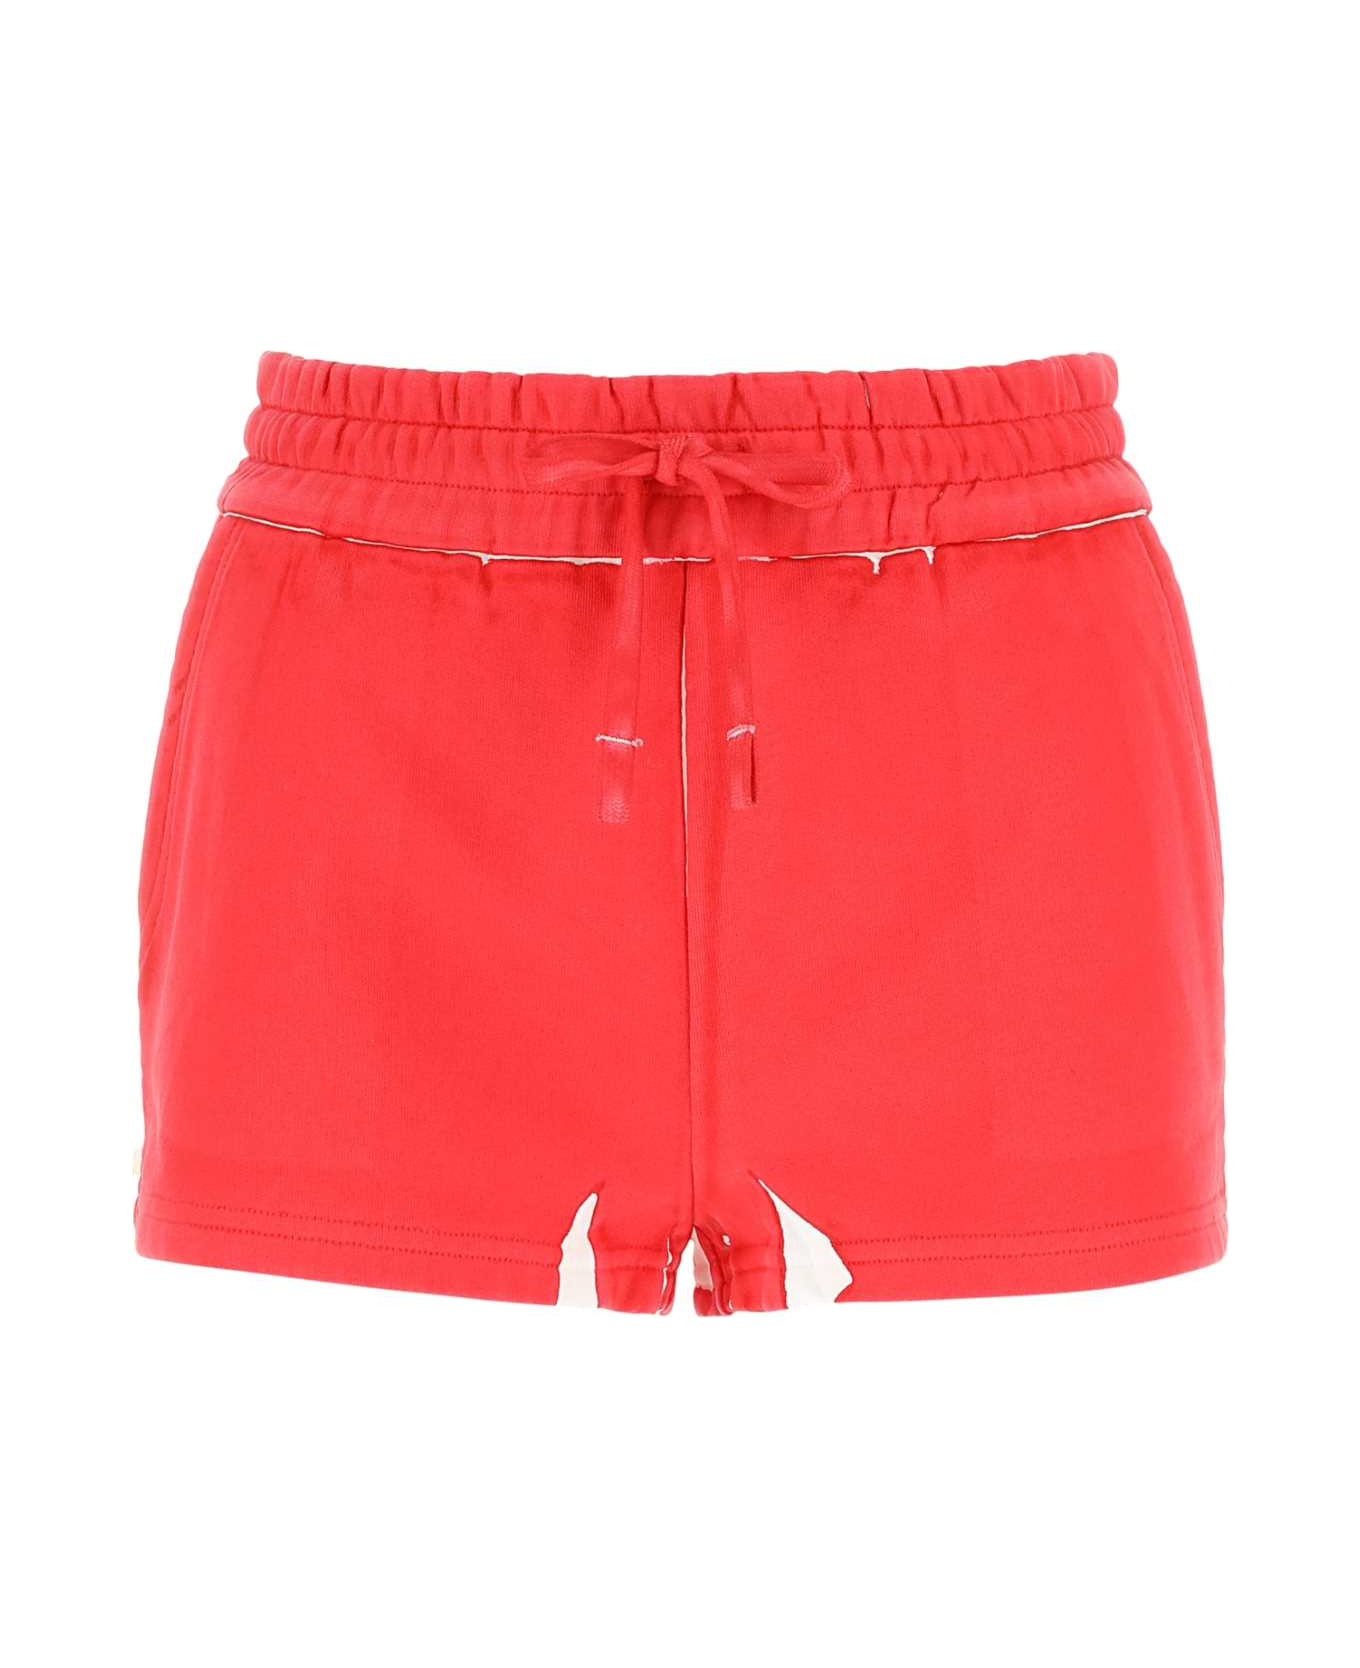 Miu Miu Red Cotton Shorts - ROSSO